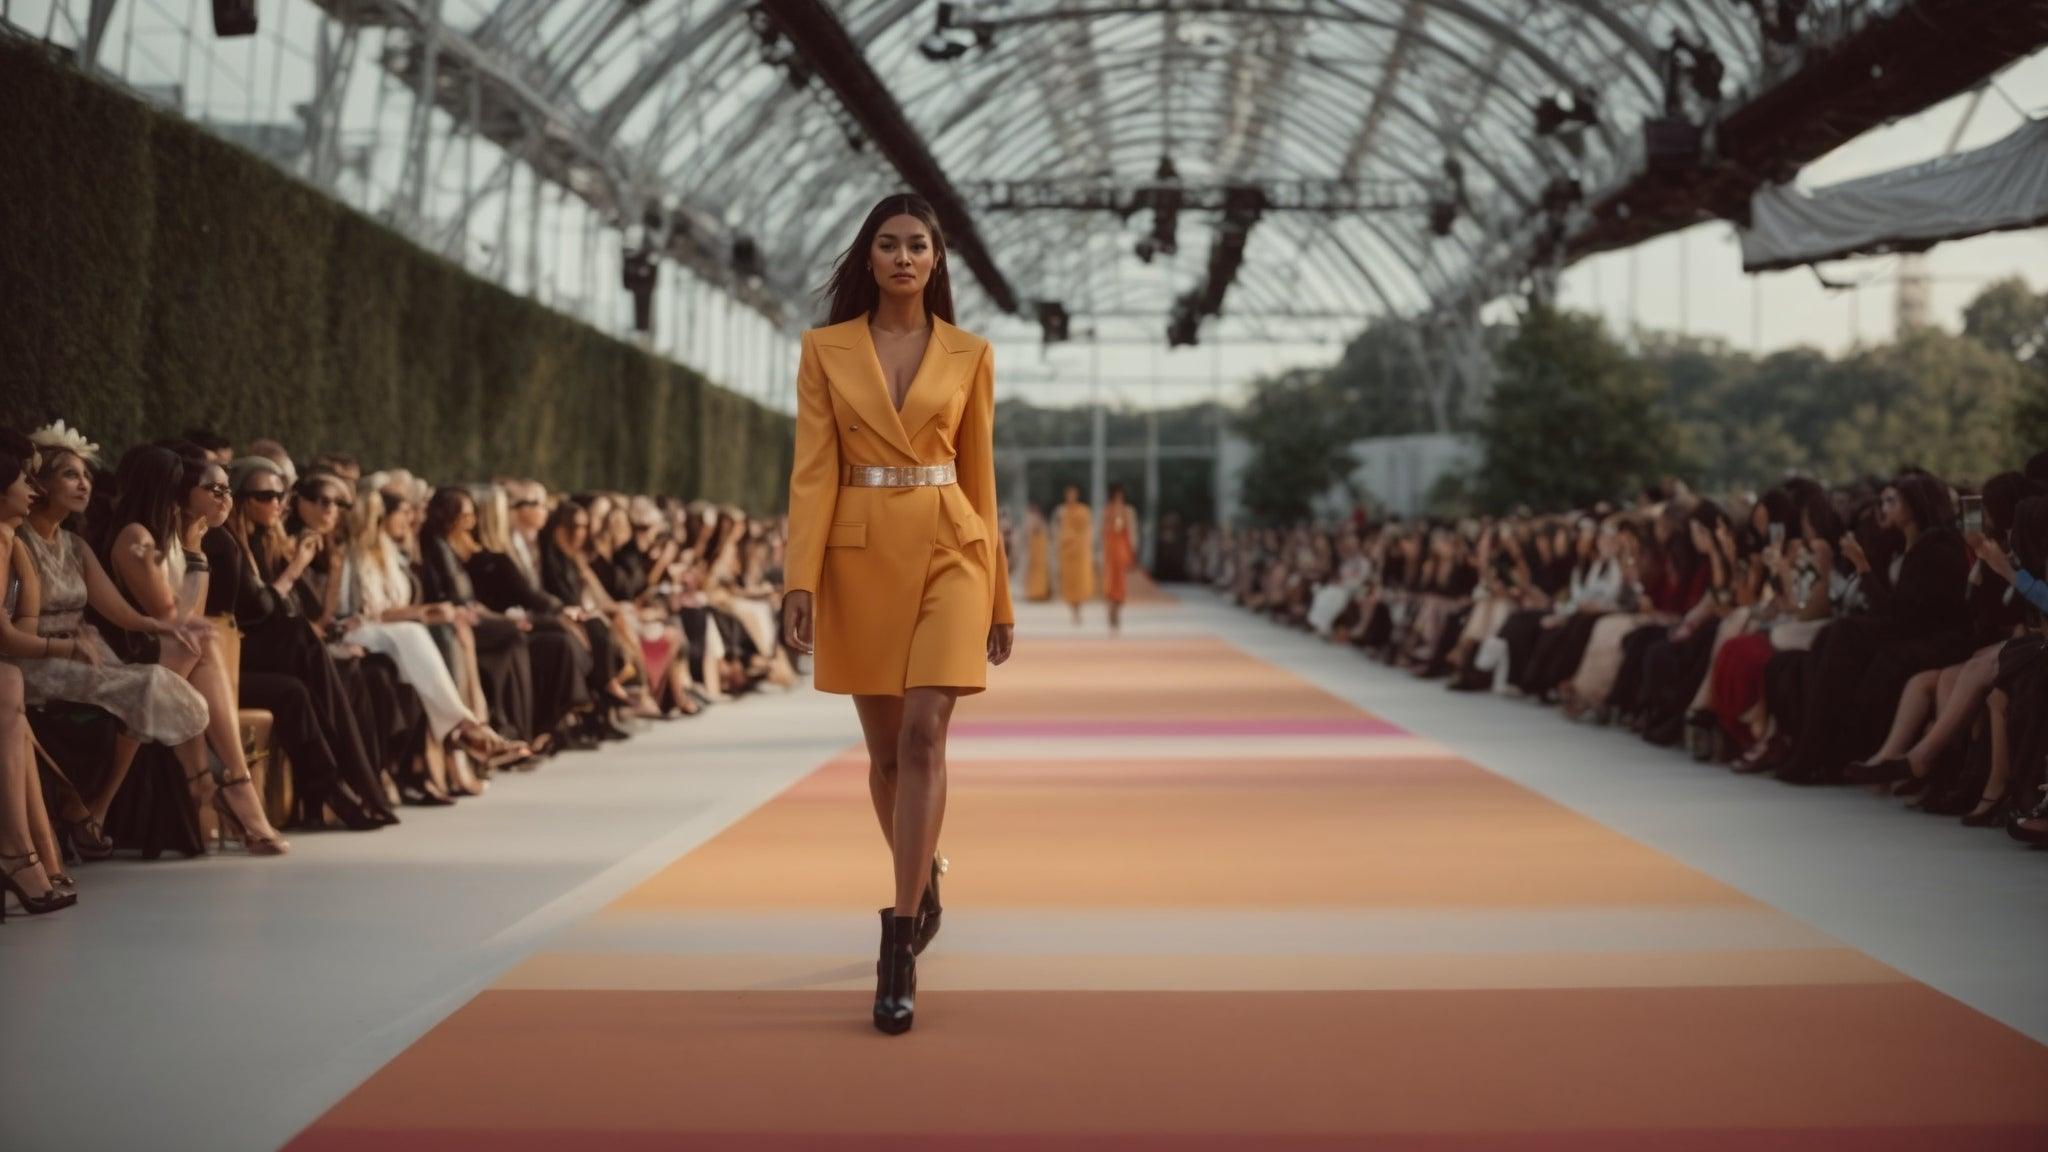 Female Fashion Model Walking Down Fashion Runway At Fashion Event Wearing Orange Blazer Suit Set